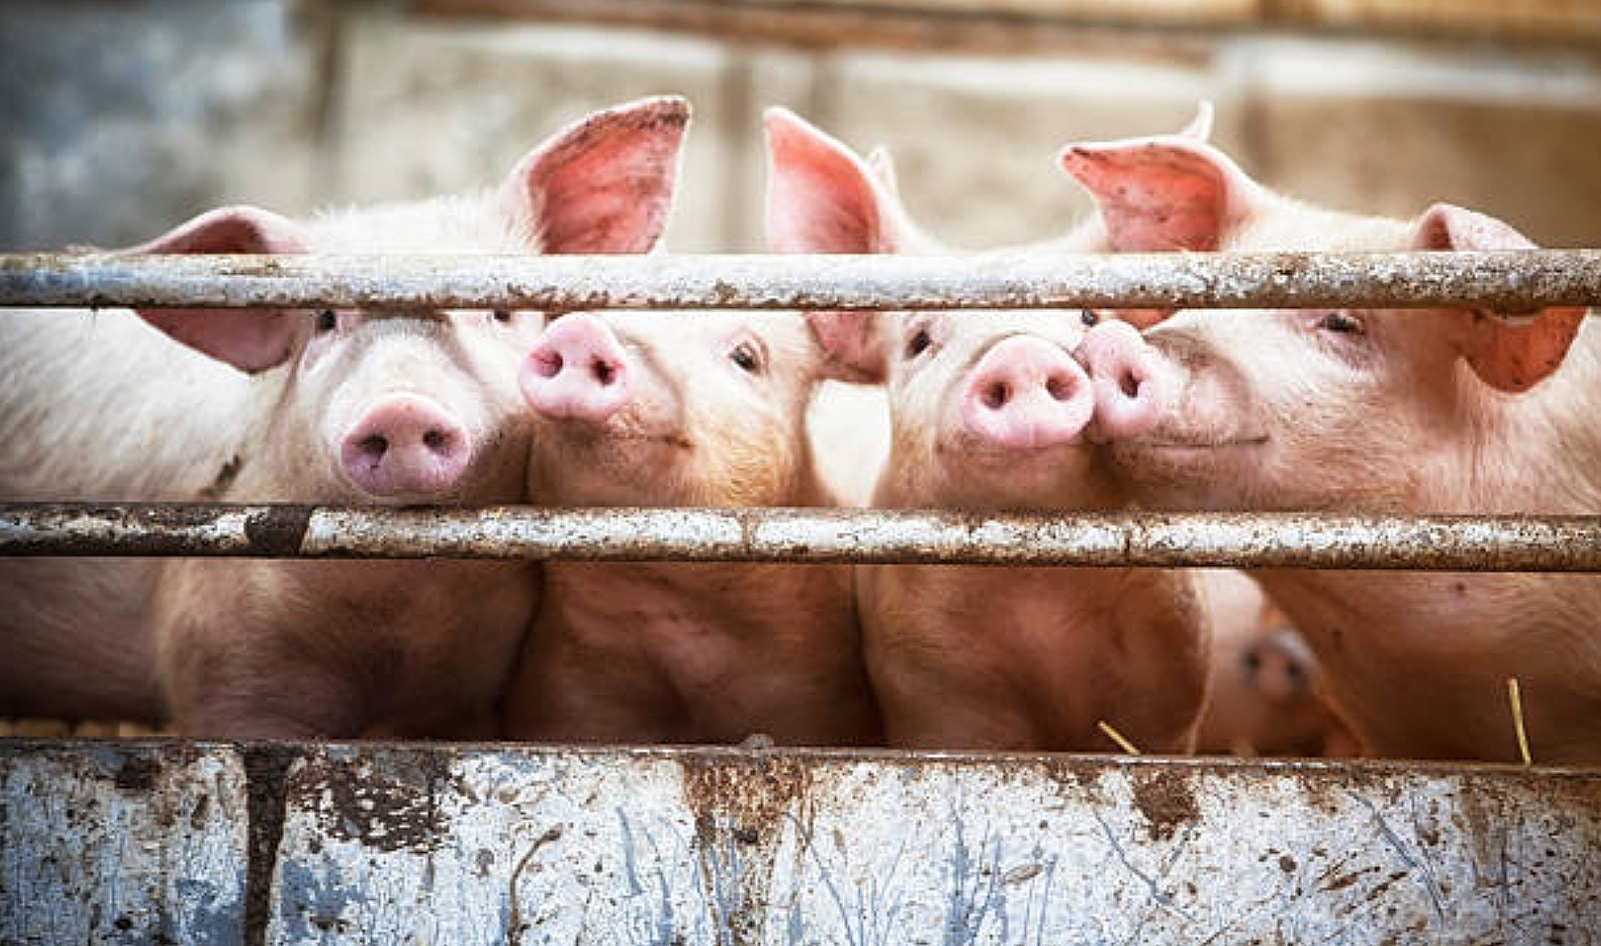 Europe’s Largest Pork Producer to Launch Vegan Burger